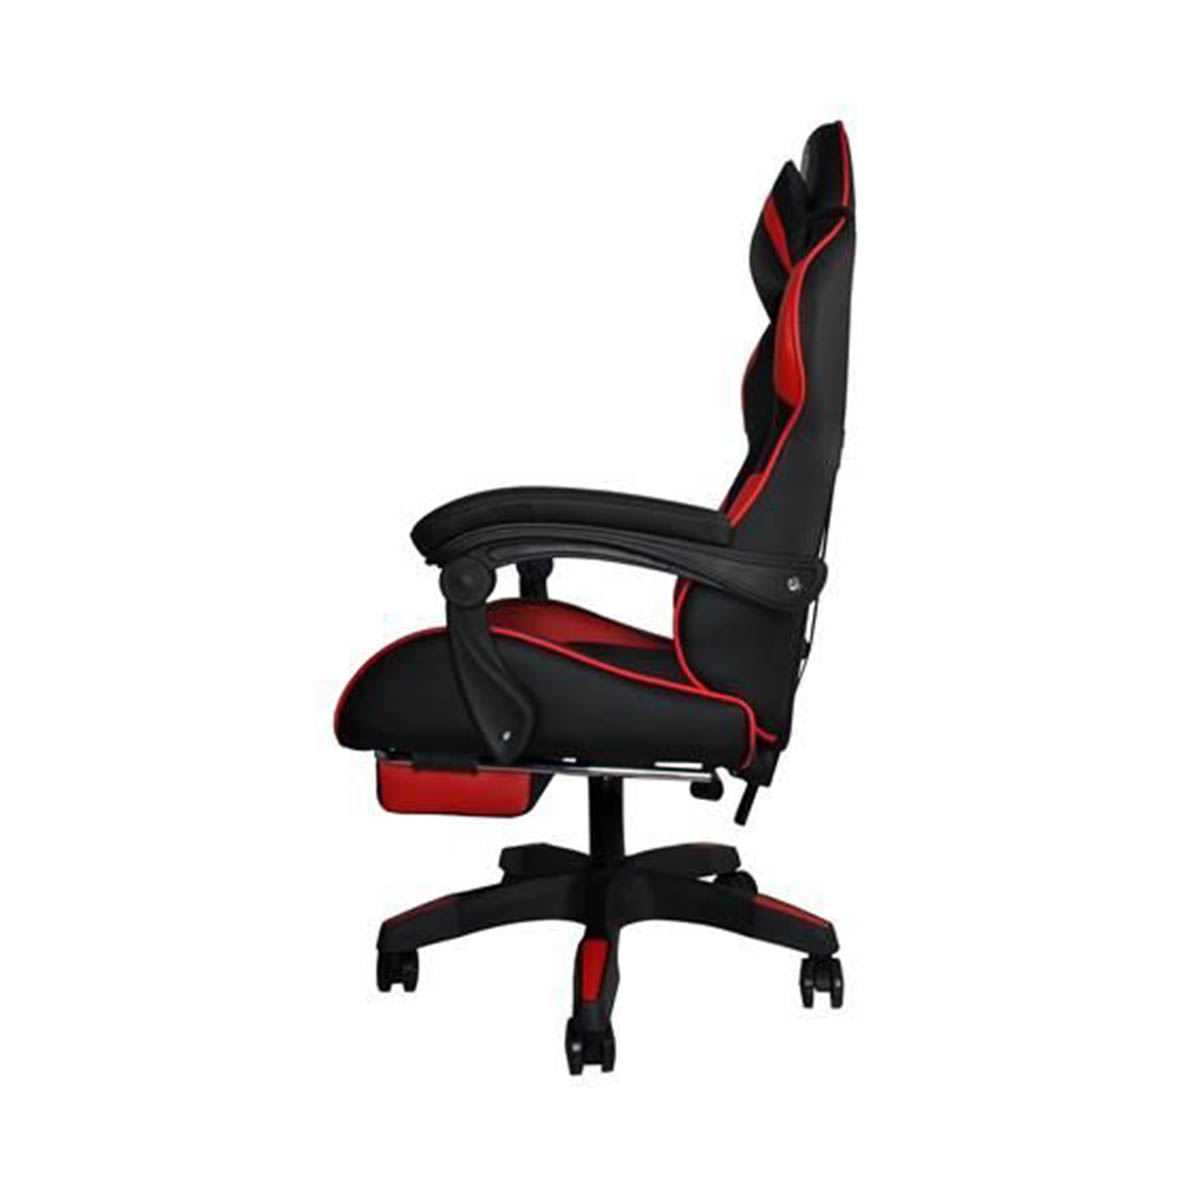 Herná stolička čierno-červená Malatec -2